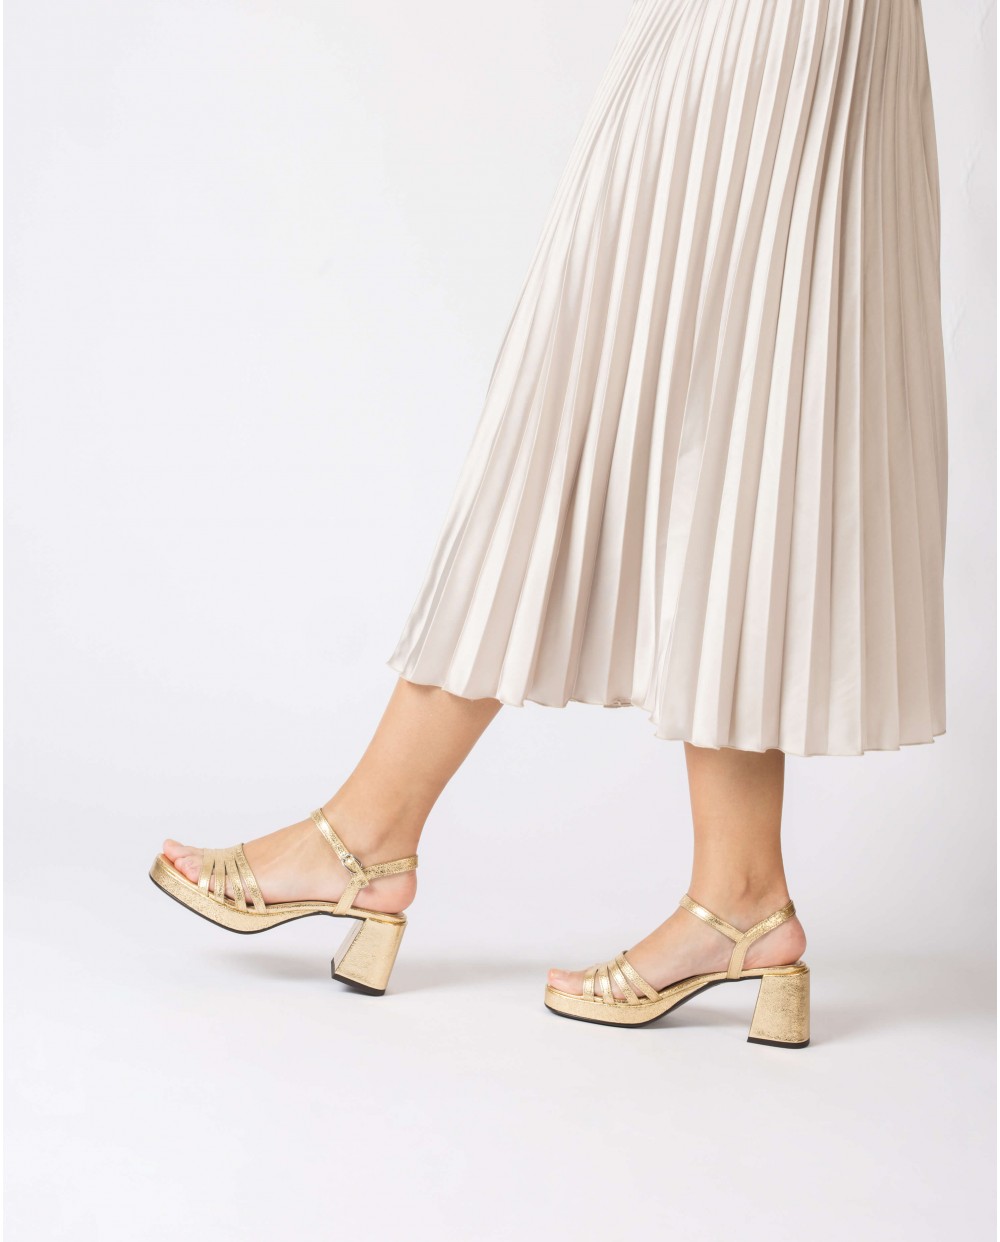 Wonders-Women shoes-Gold ZAIDA heeled sandals